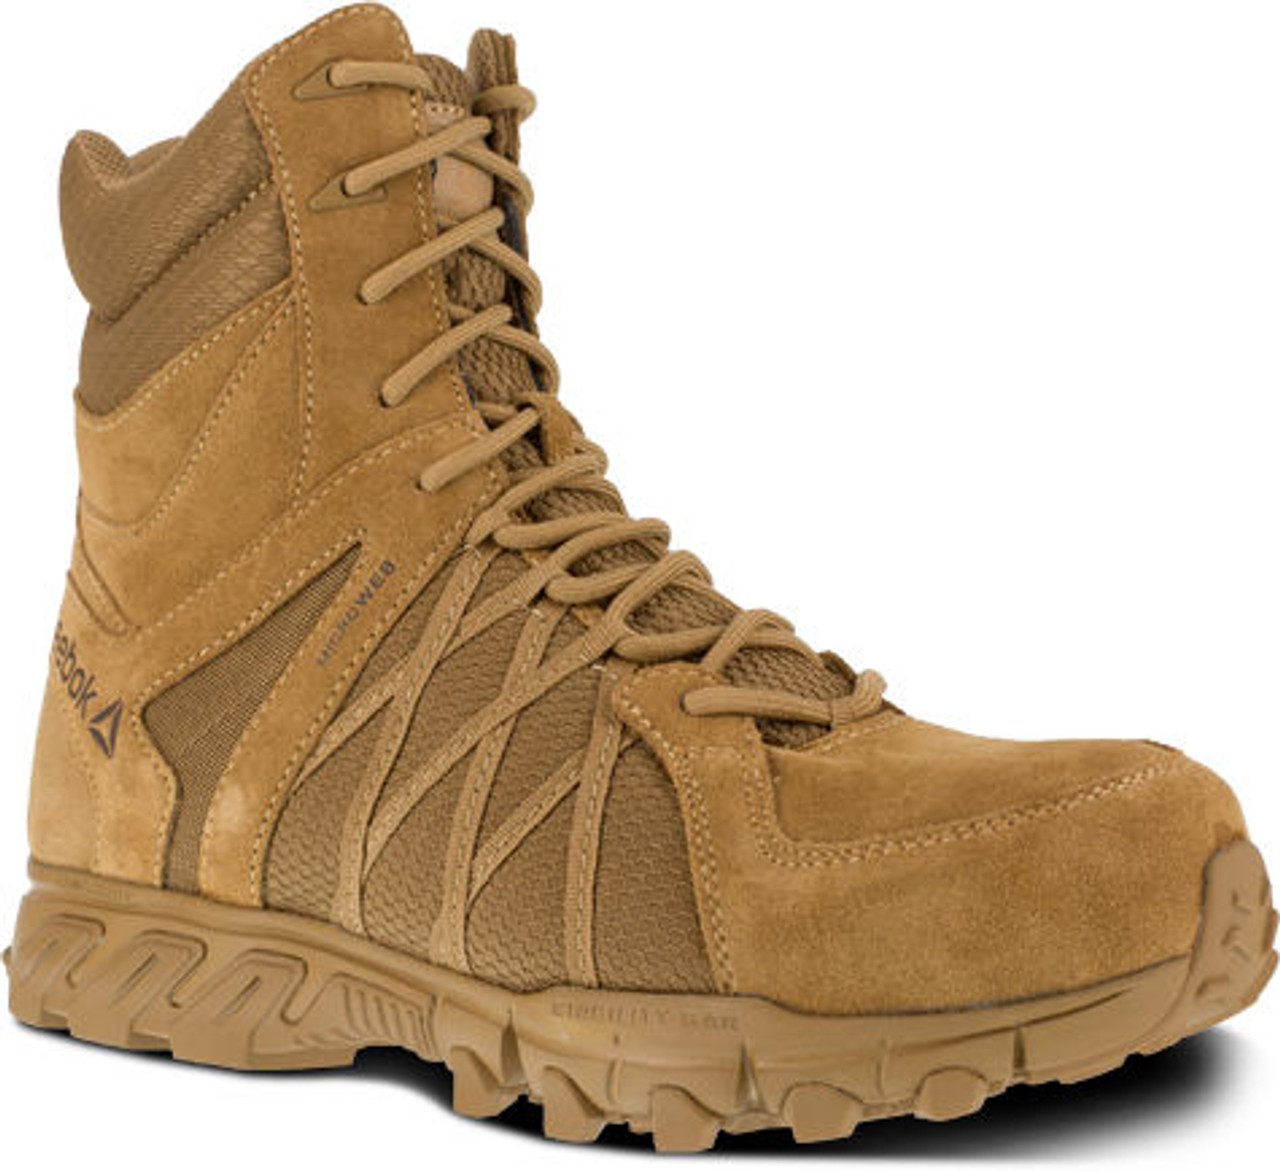 digerir Sentirse mal helado Reebok Trailgrip Tactical Comp Toe Boot - Coyote - Kel-Lac Uniforms, Inc.